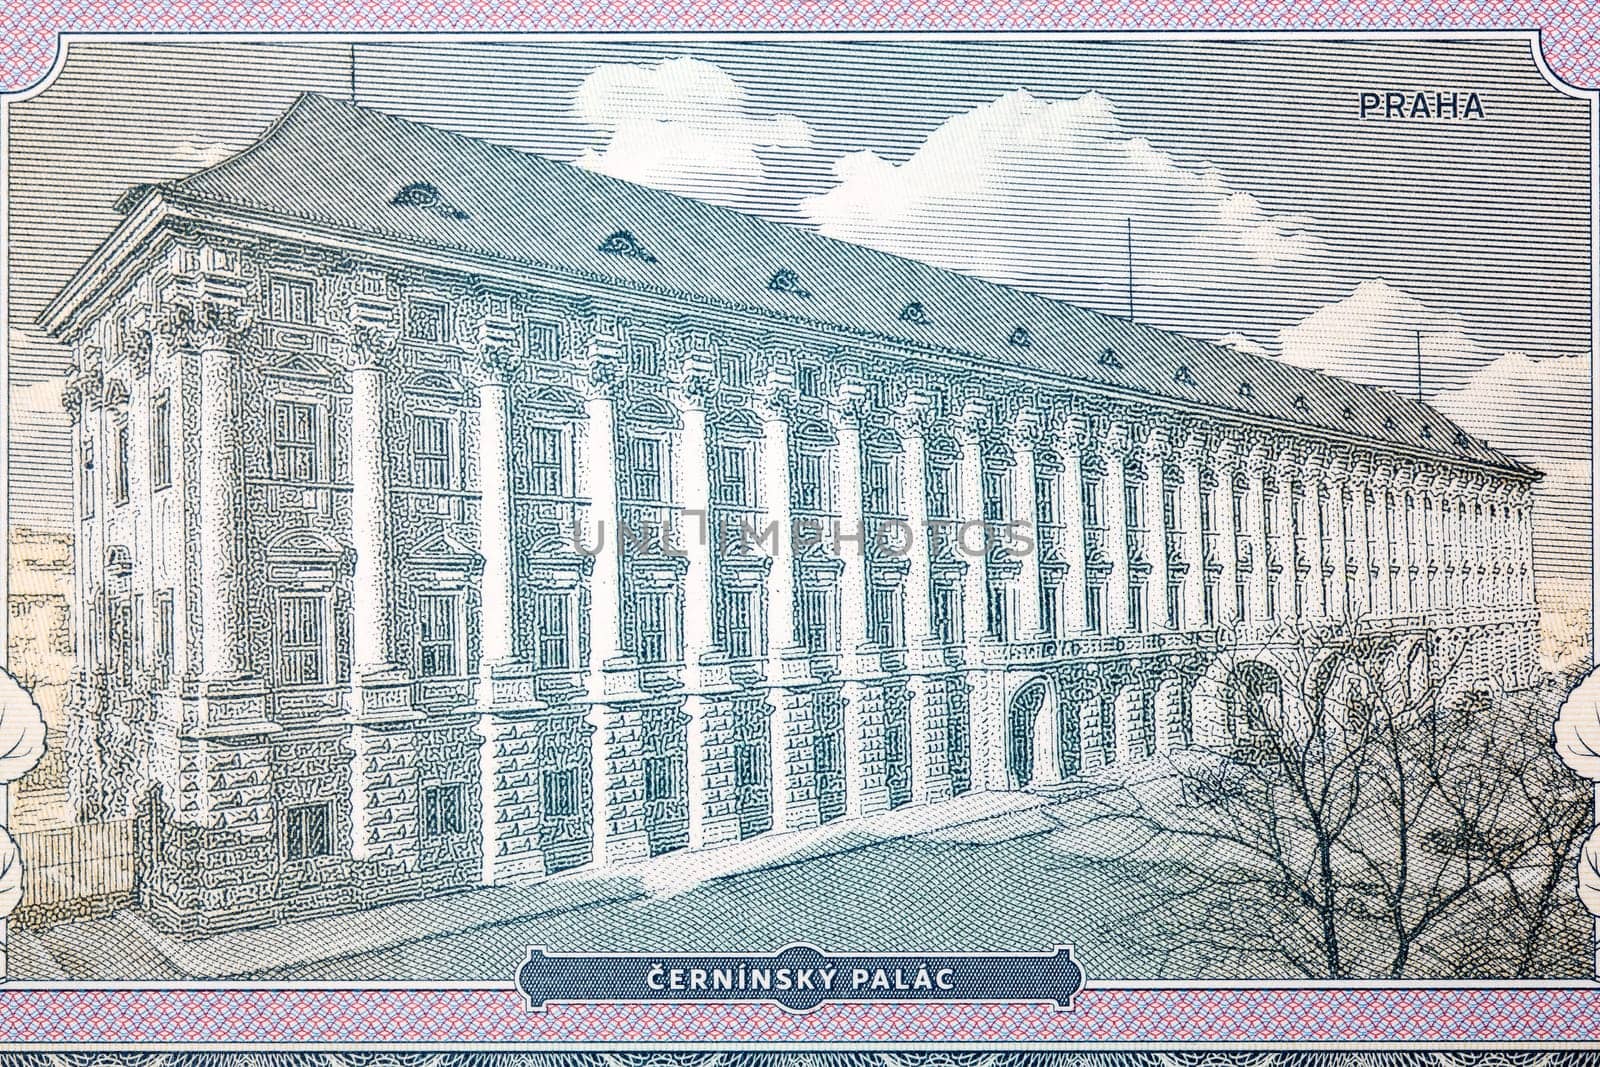 Czernin Palace in Prague from money by johan10